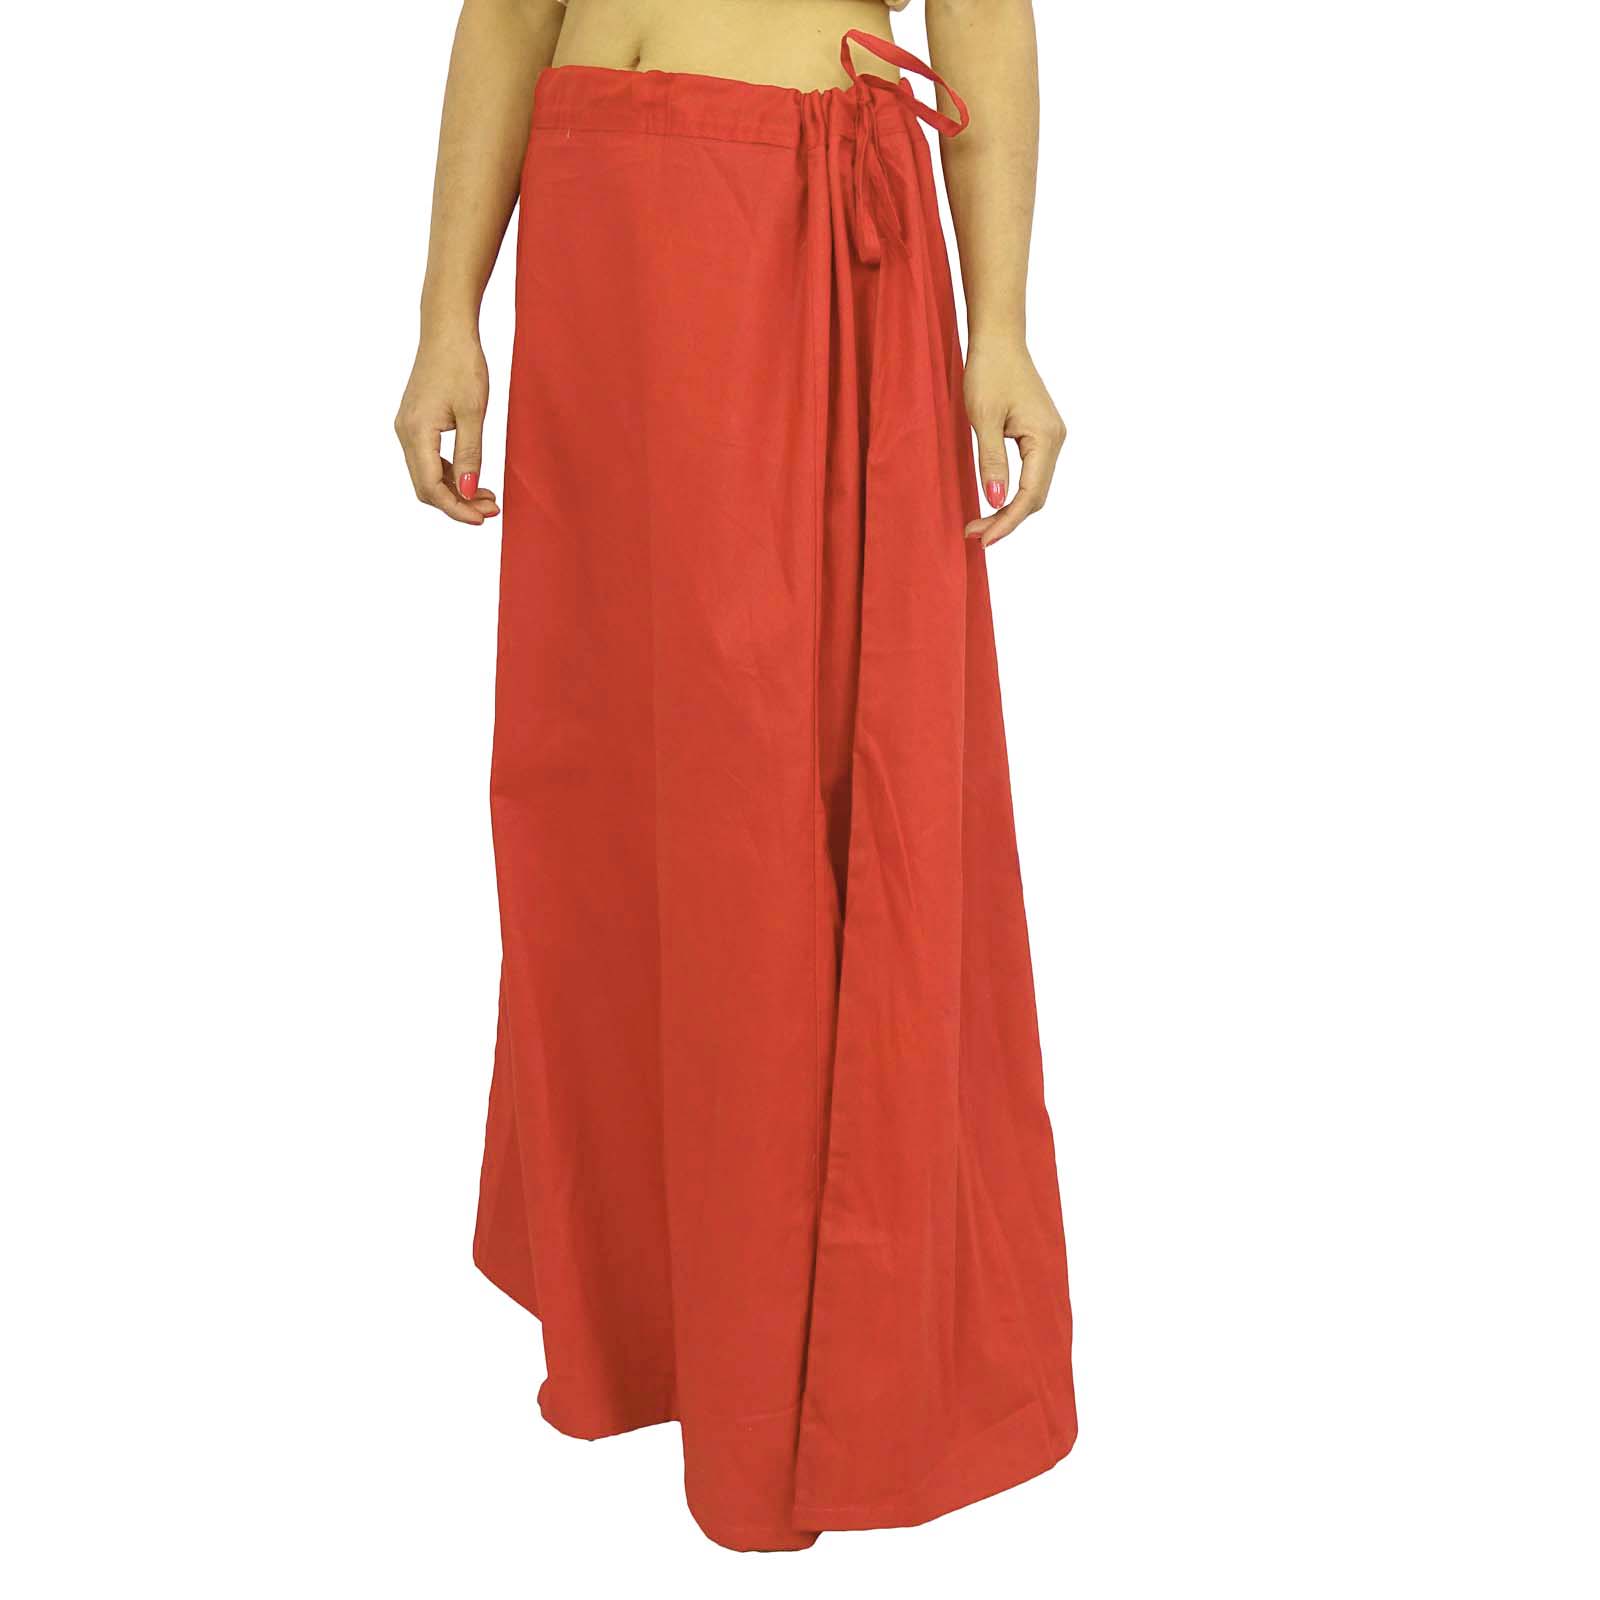 Saree Petticoat Underskirt Cotton Bollywood Indian Lining For Sari-Njd ...